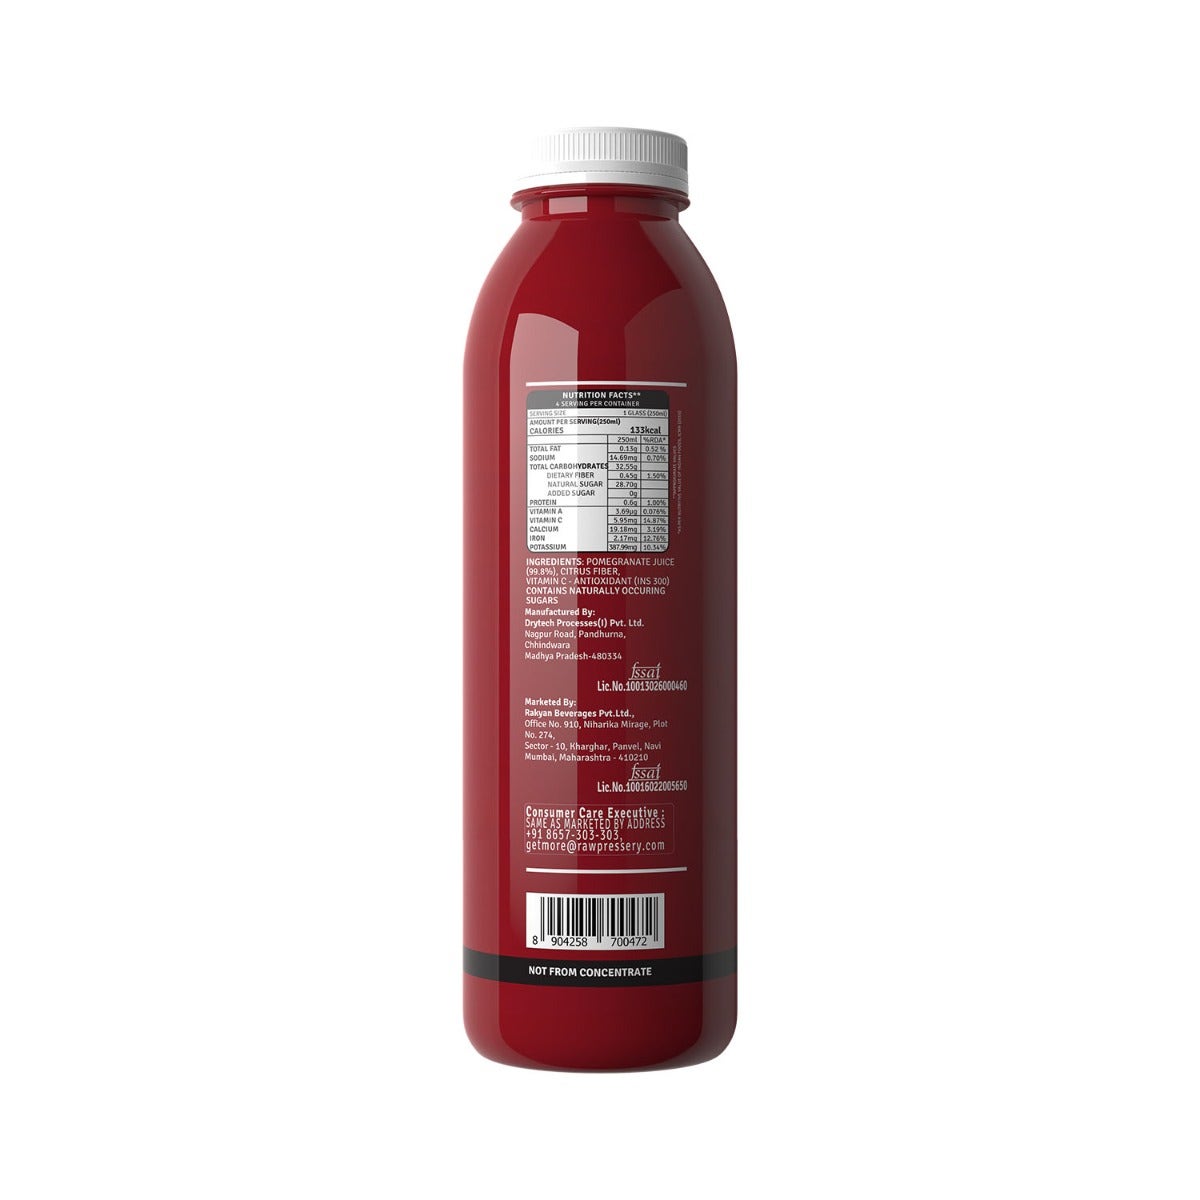 pomegrante juice ingredient